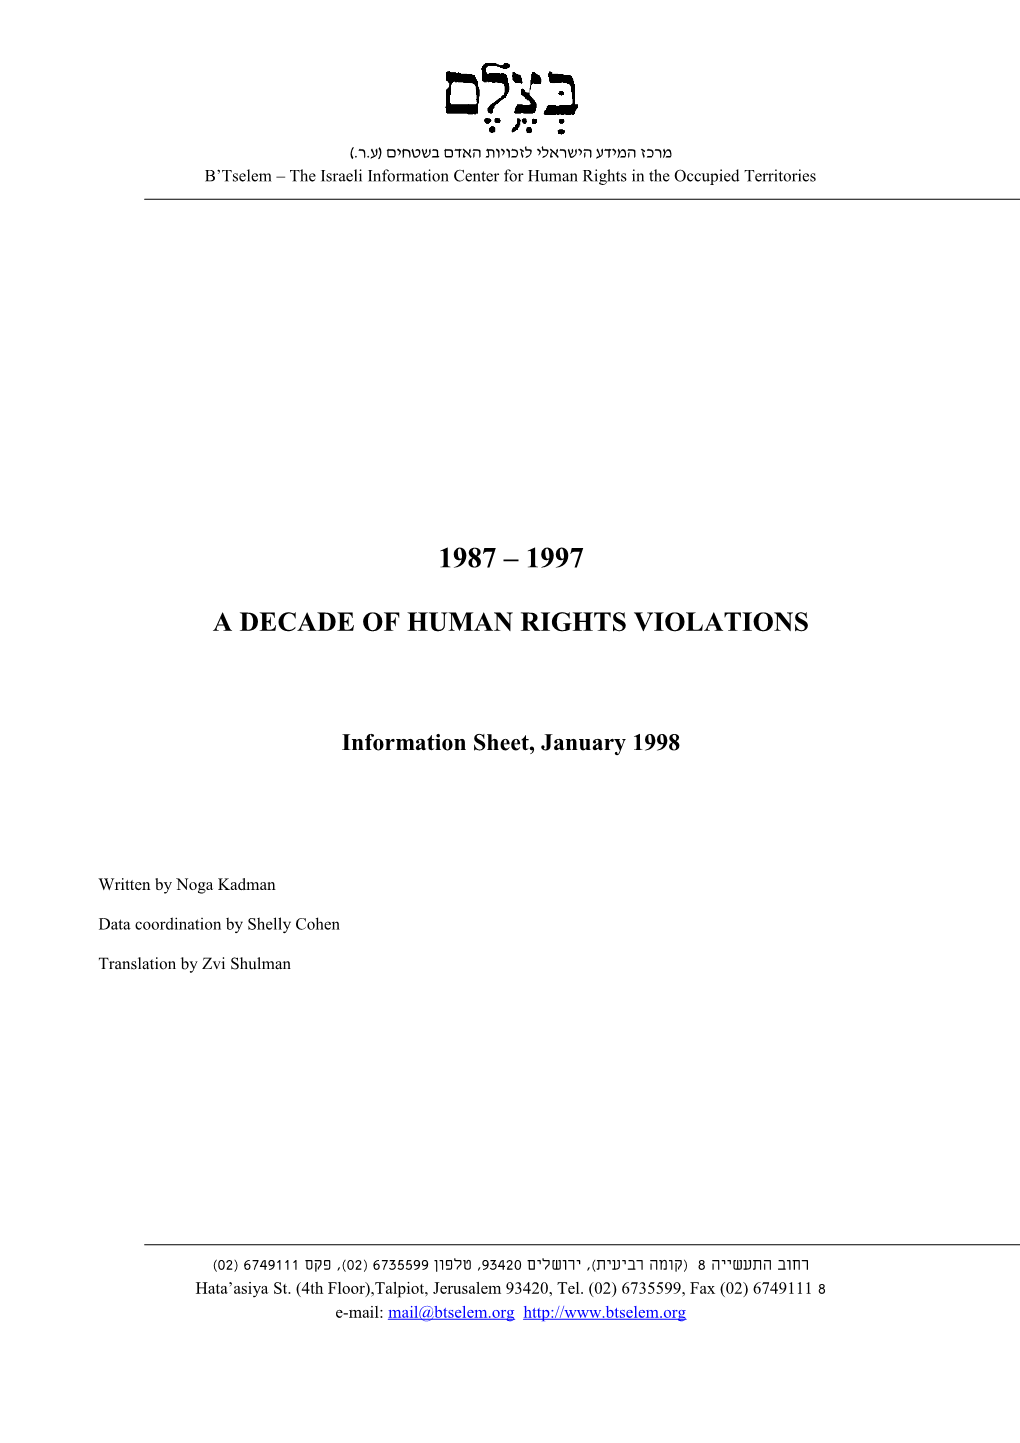 1987 1997: Ten Years Since the Intifada Began